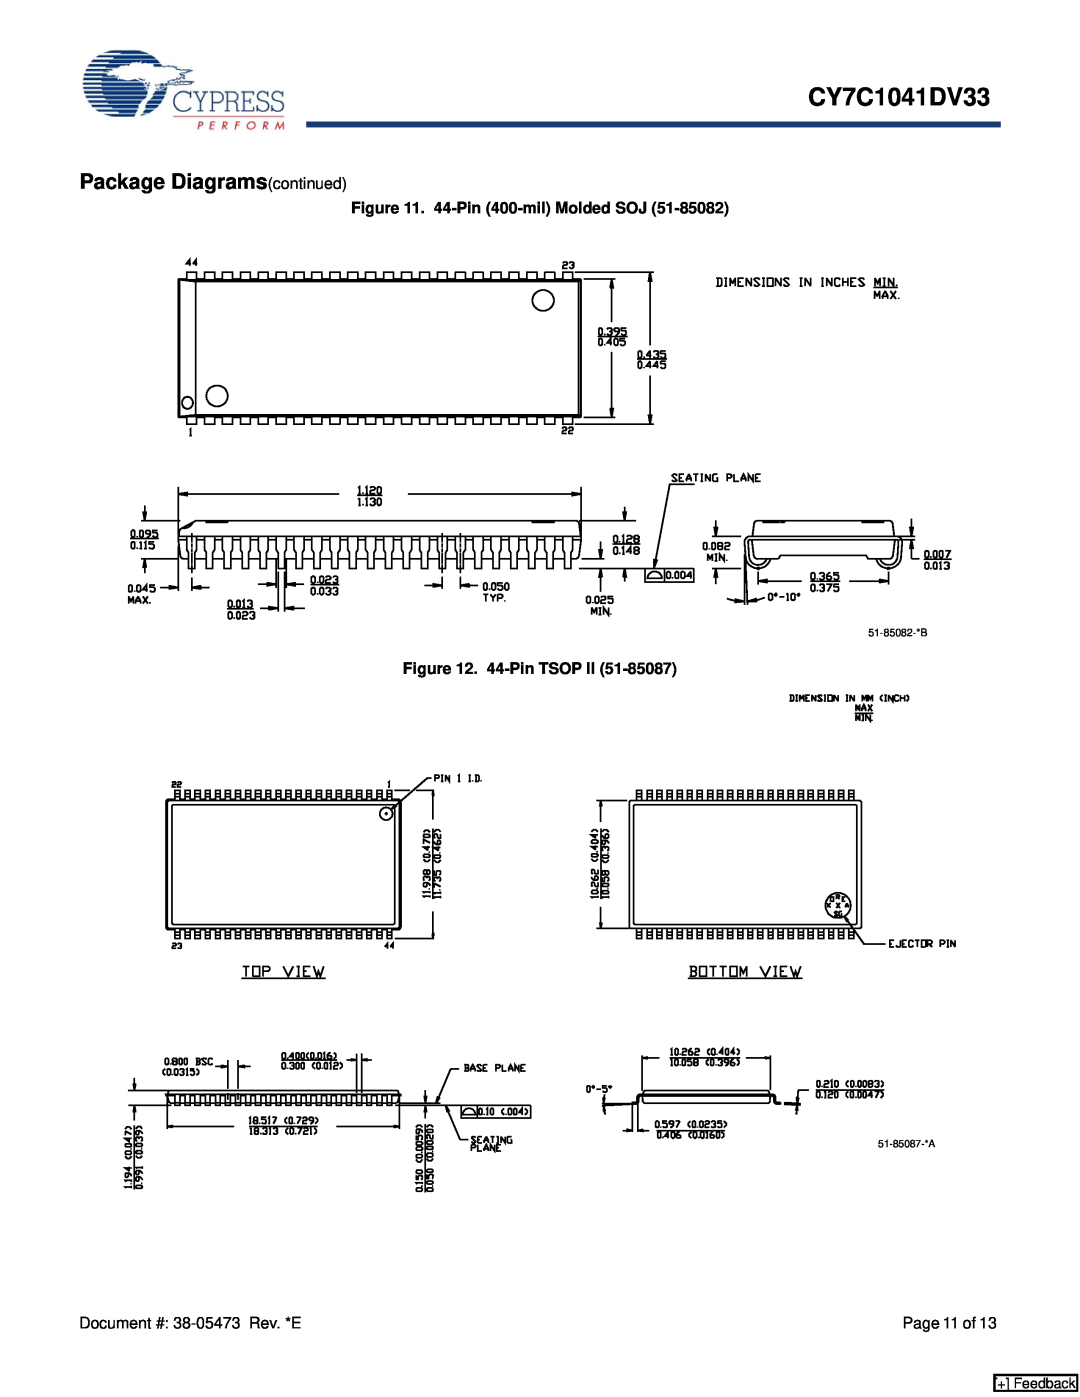 Cypress CY7C1041DV33 manual Package Diagramscontinued, 44-Pin 400-mil Molded SOJ, 44-Pin TSOP II, + Feedback 